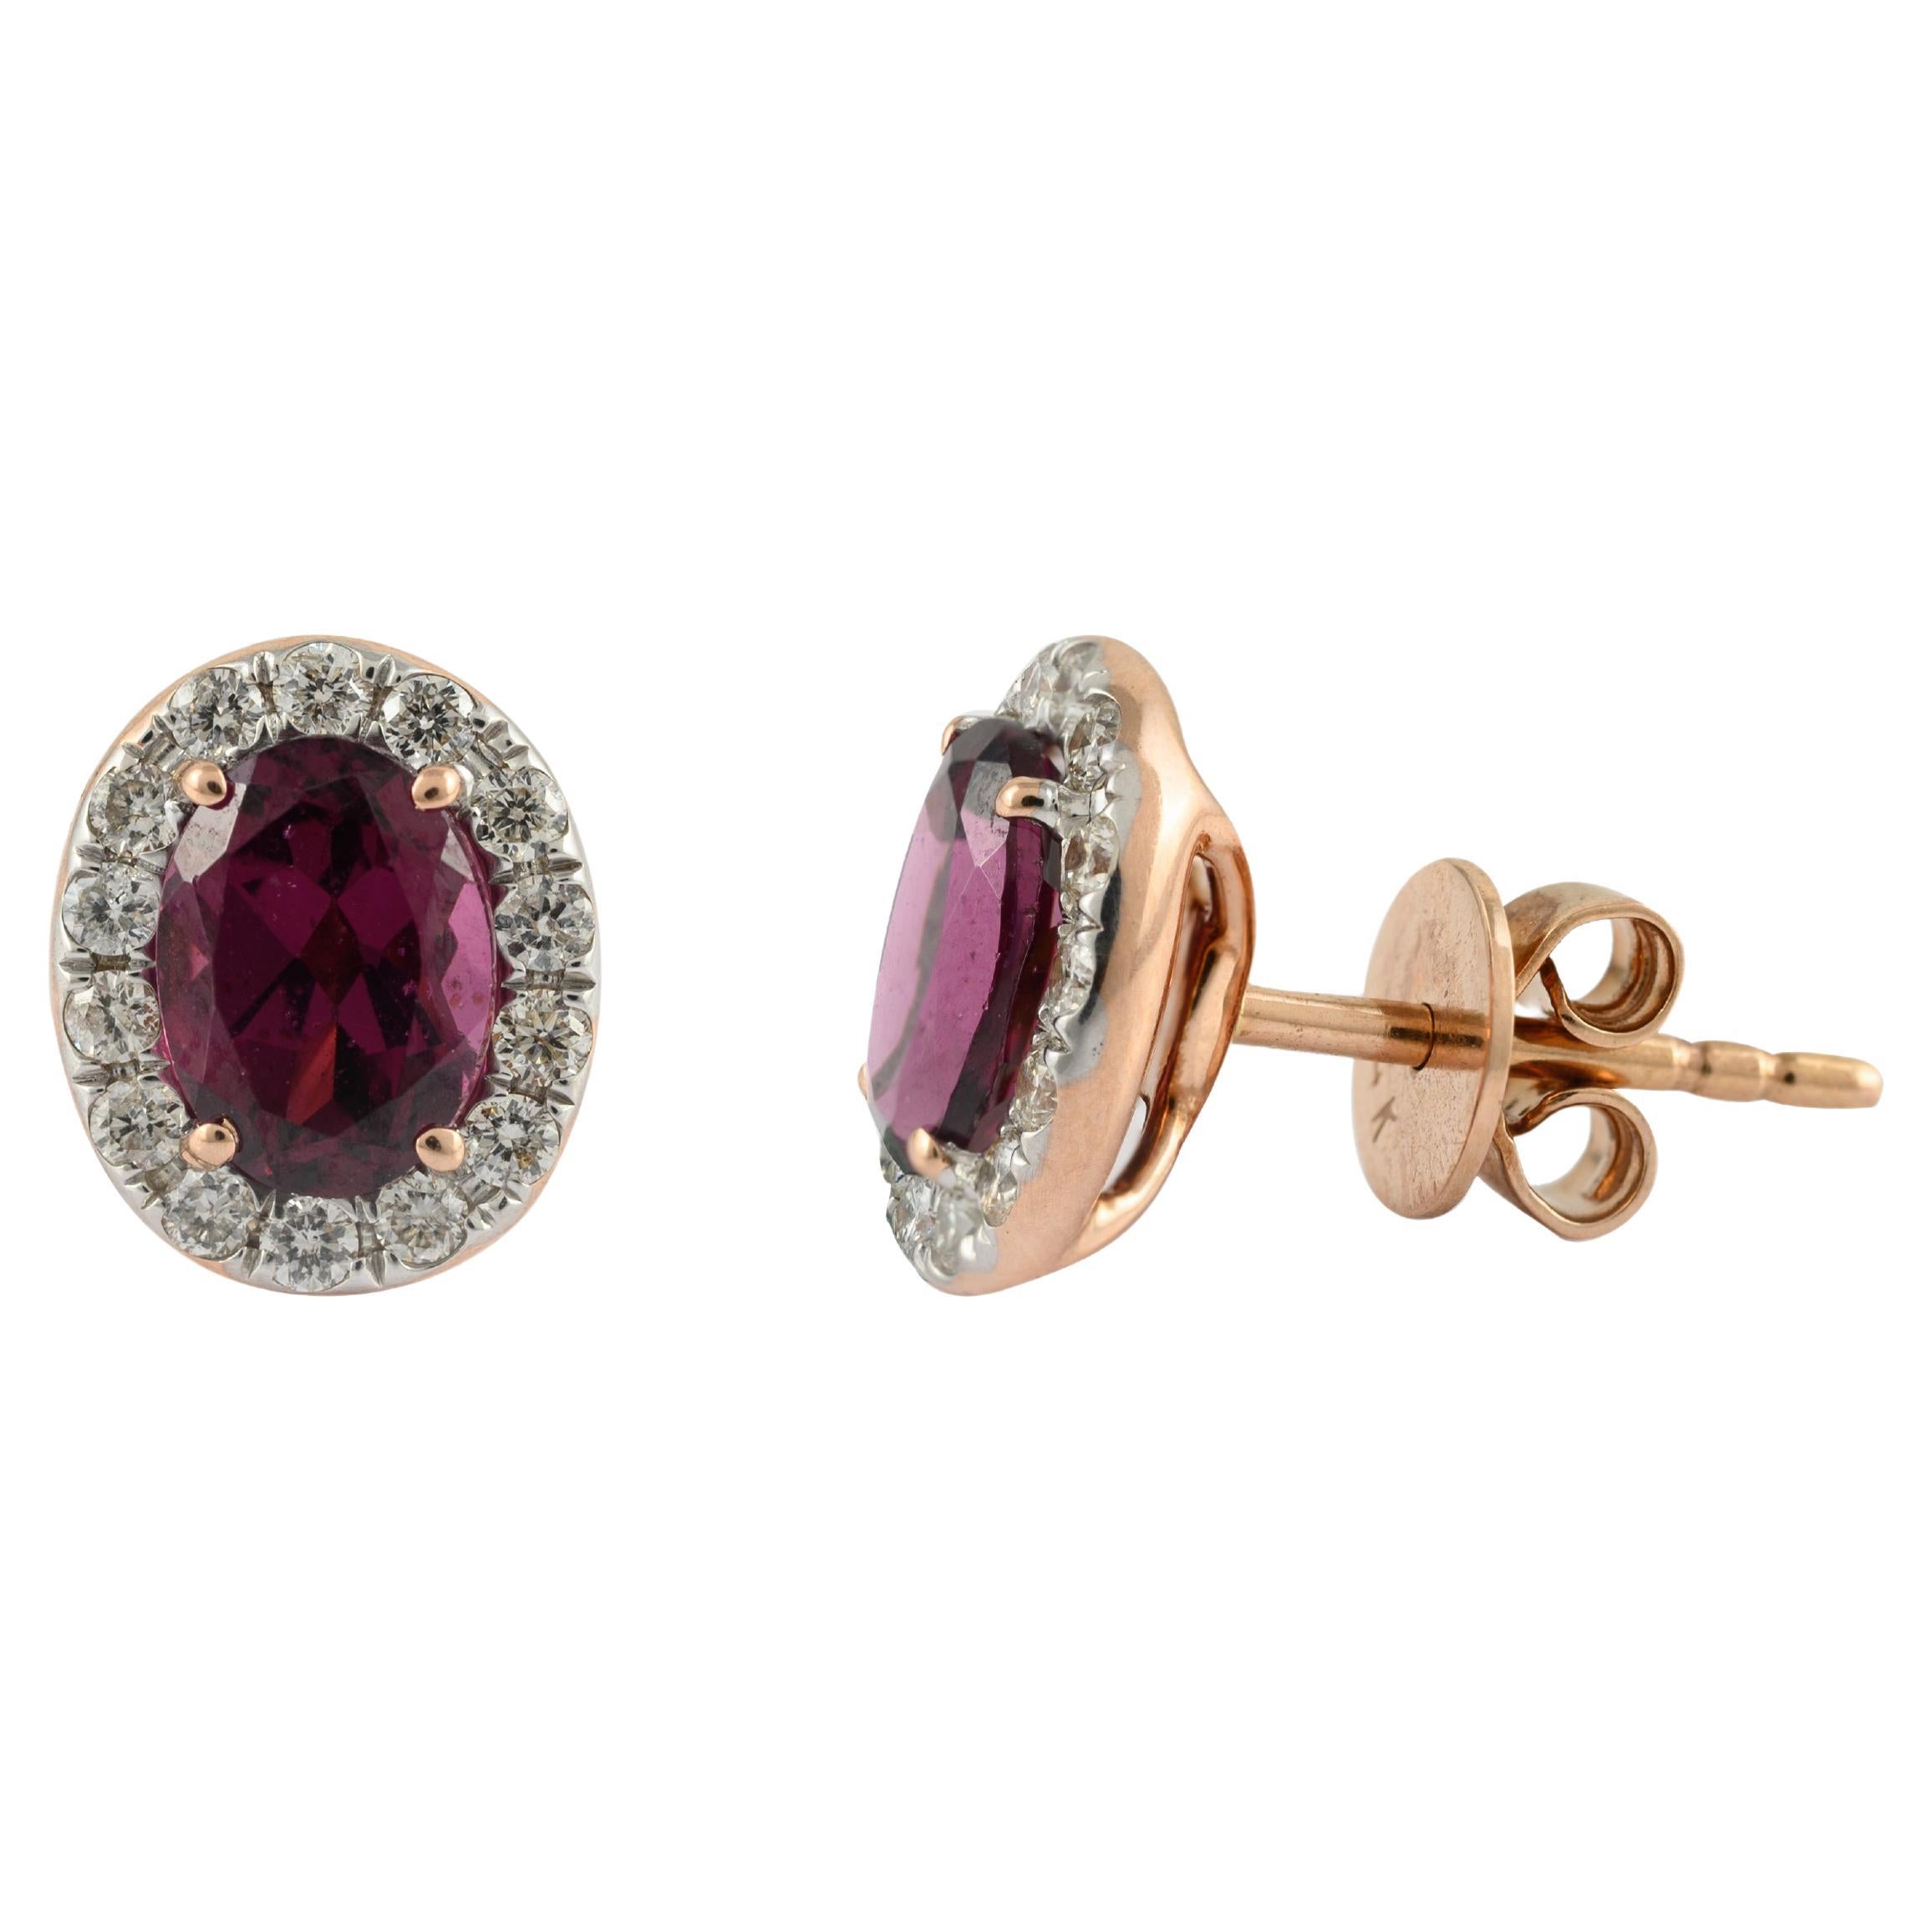 Gorgeous Rhodolite Garnet and Halo Diamond Stud Earrings 14k Rose Gold